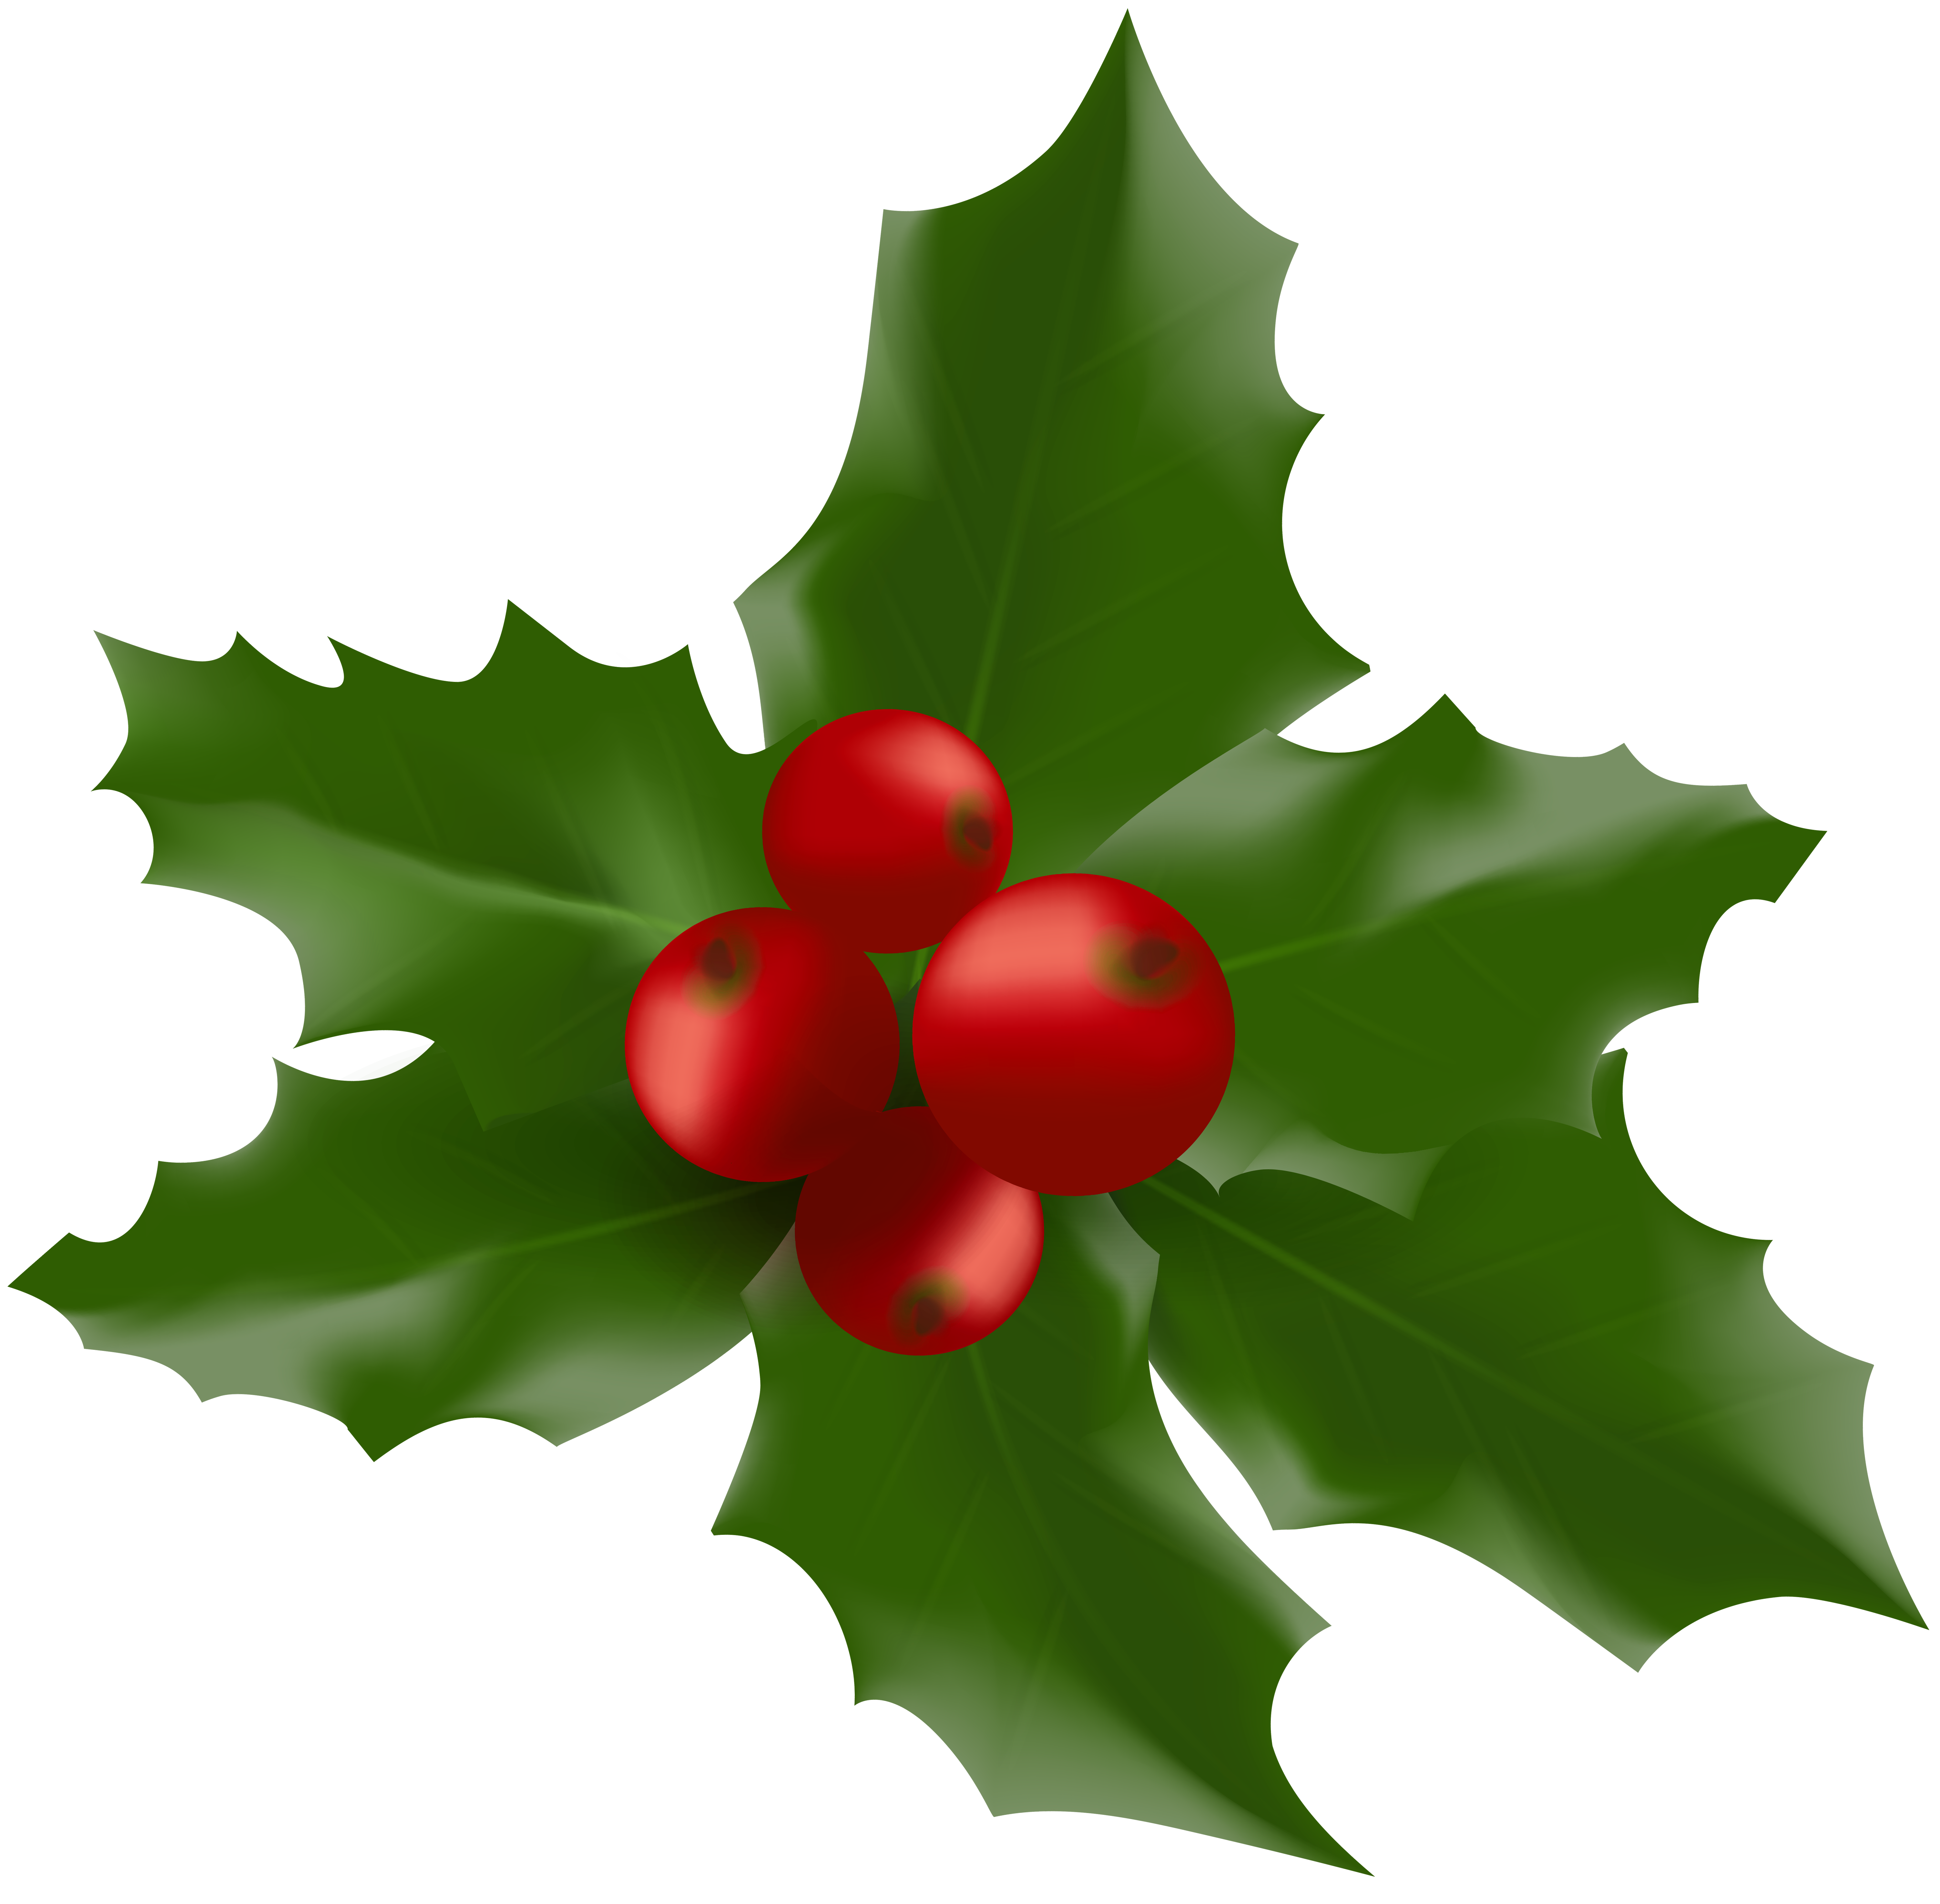 Christmas Mistletoe Large PNG Clipart Image